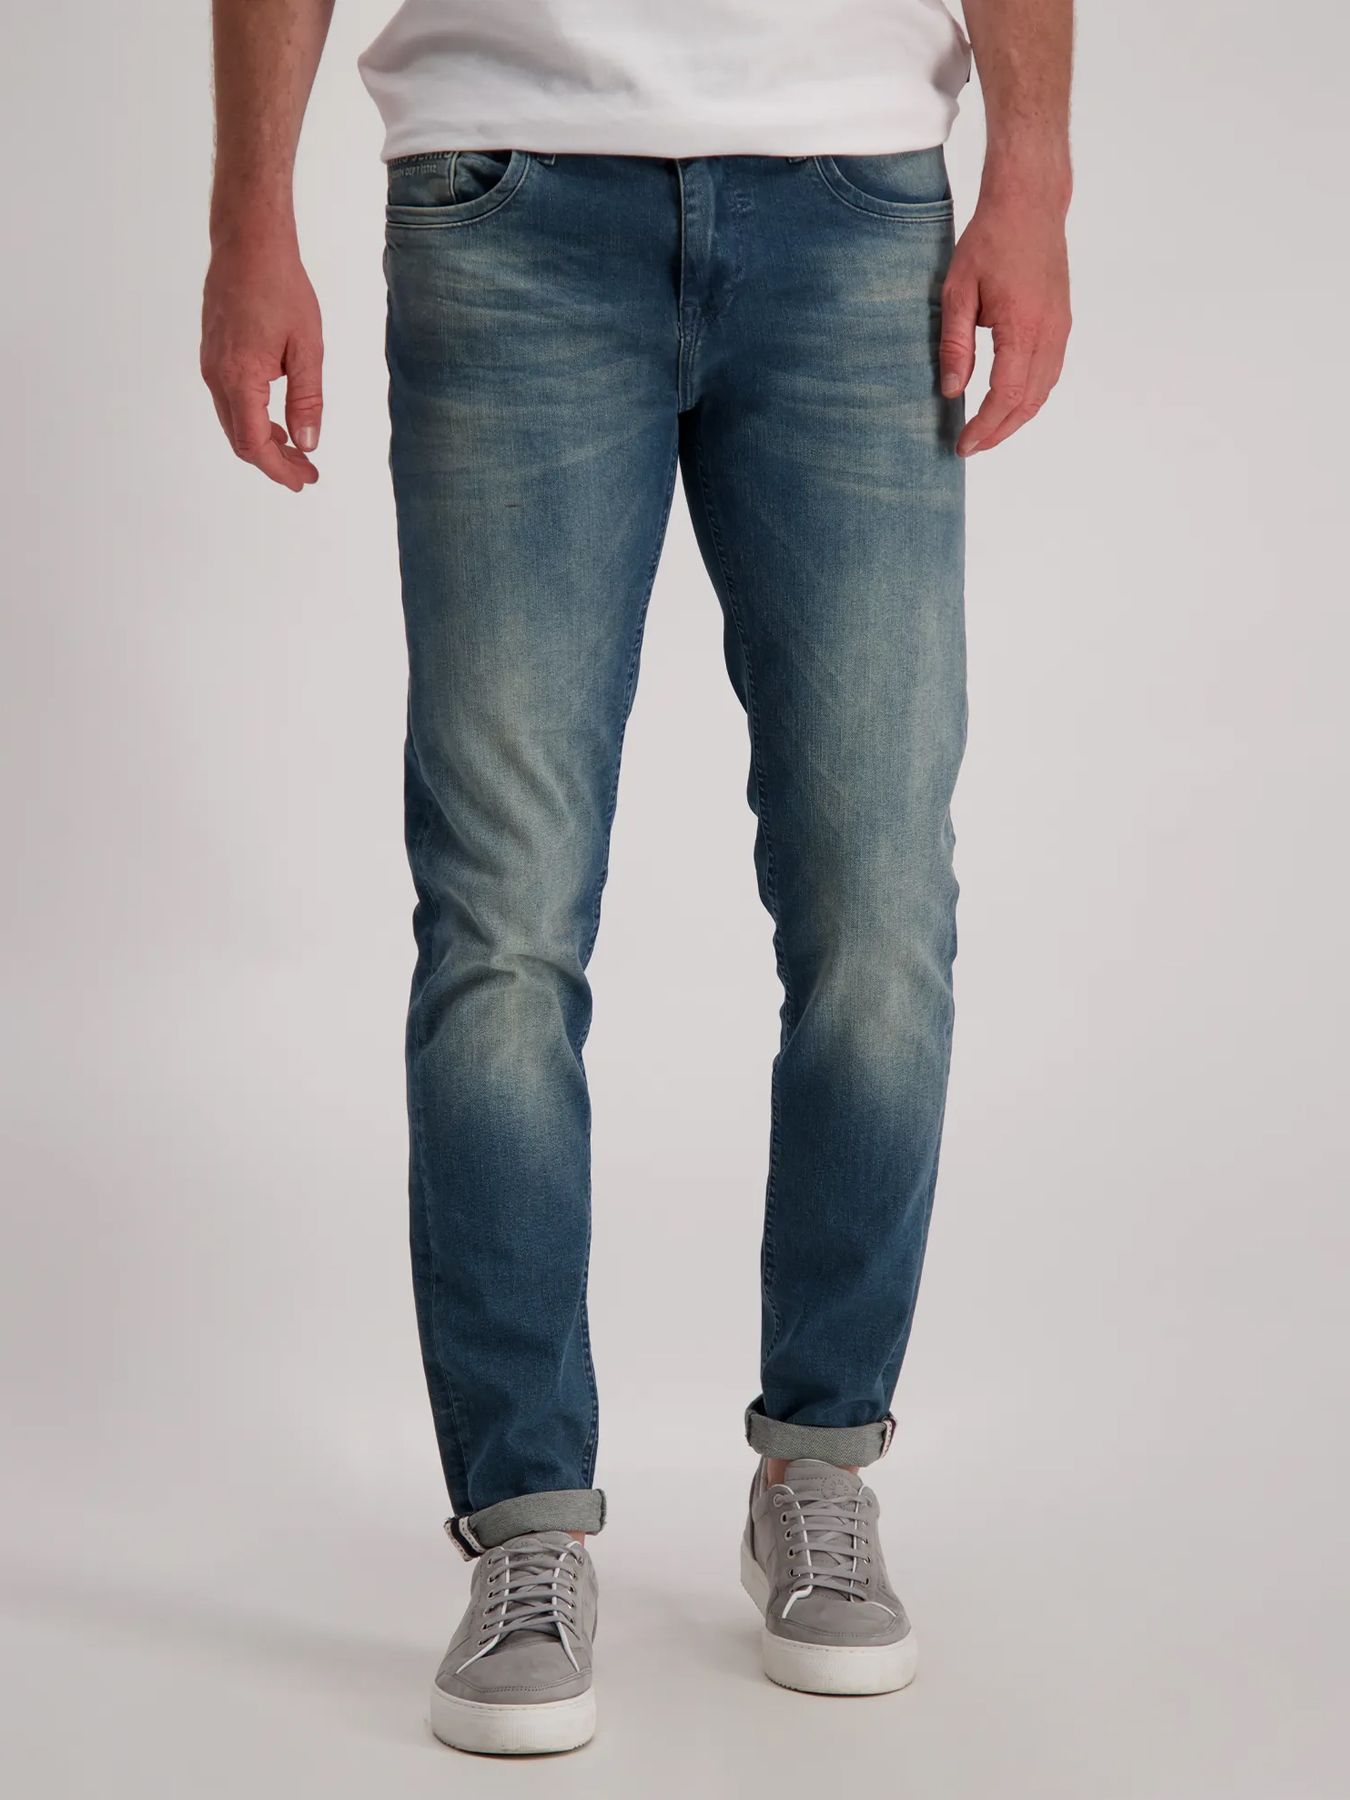 Cars jeans Jeans Blast Slim Fit 81 detroit wash 00103194-EKA03000200000015